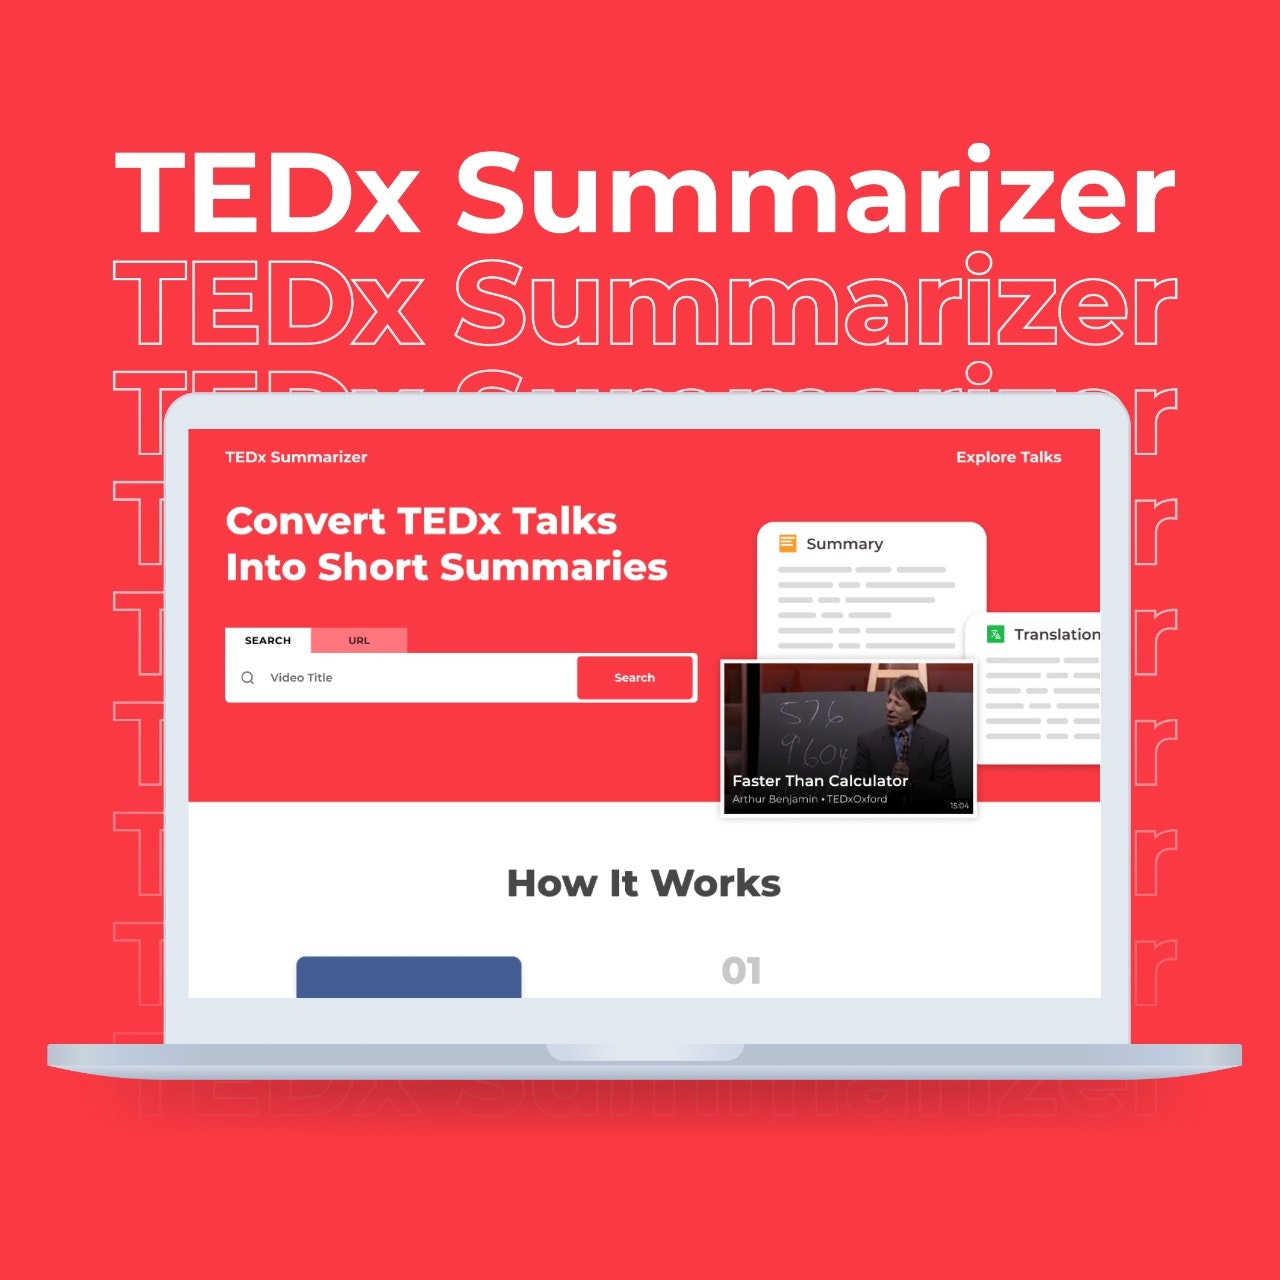 Ted Smrzr -Ted Talk Summarizer